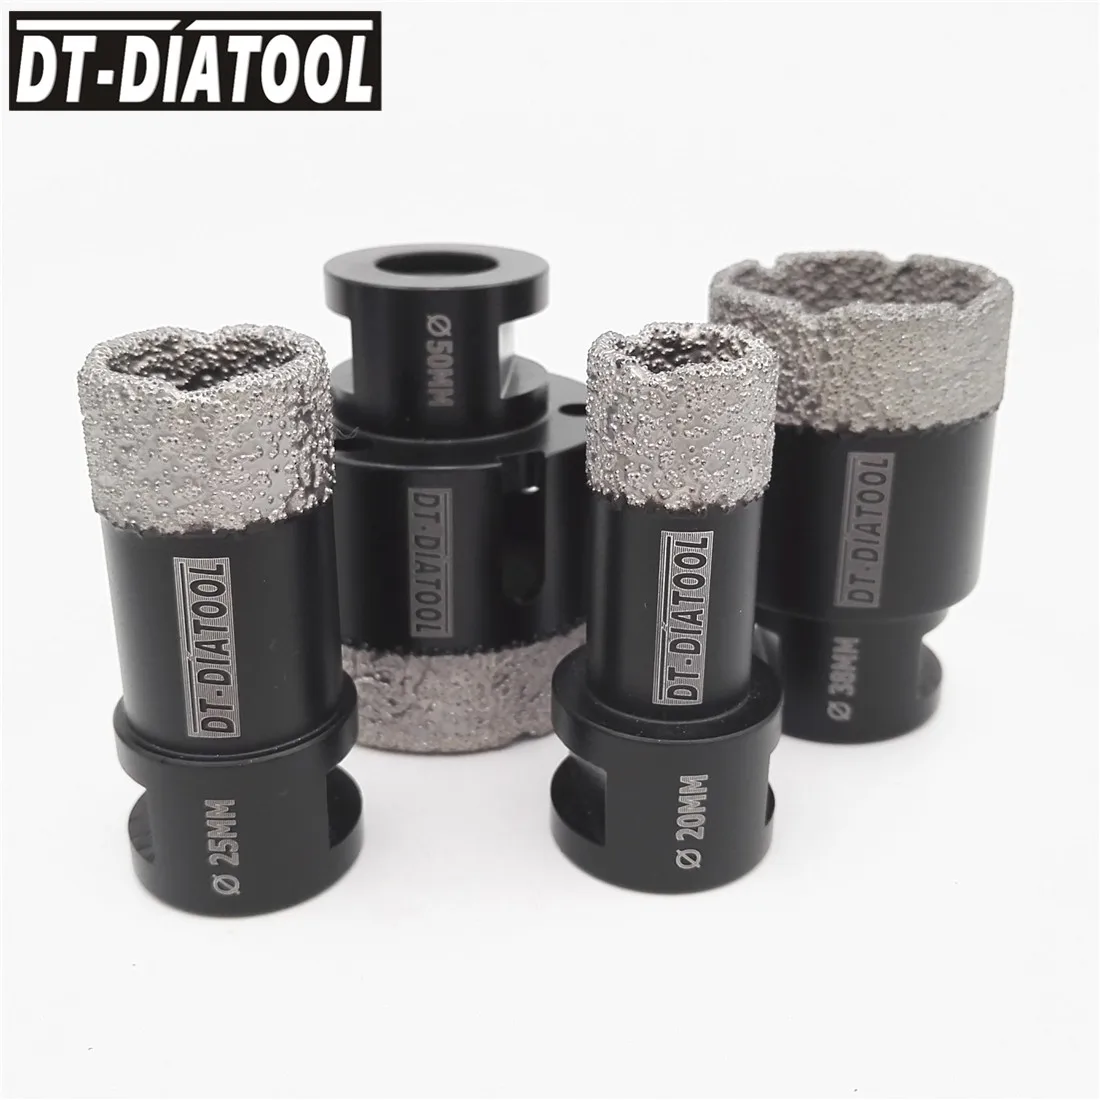 DT-DIATOOL 4pcs/pk Dry Vacuum Brazed Diamond Drilling Core Bits Hole Saw Granite Marble for Ceramic Tile Drill Bits M14 thread